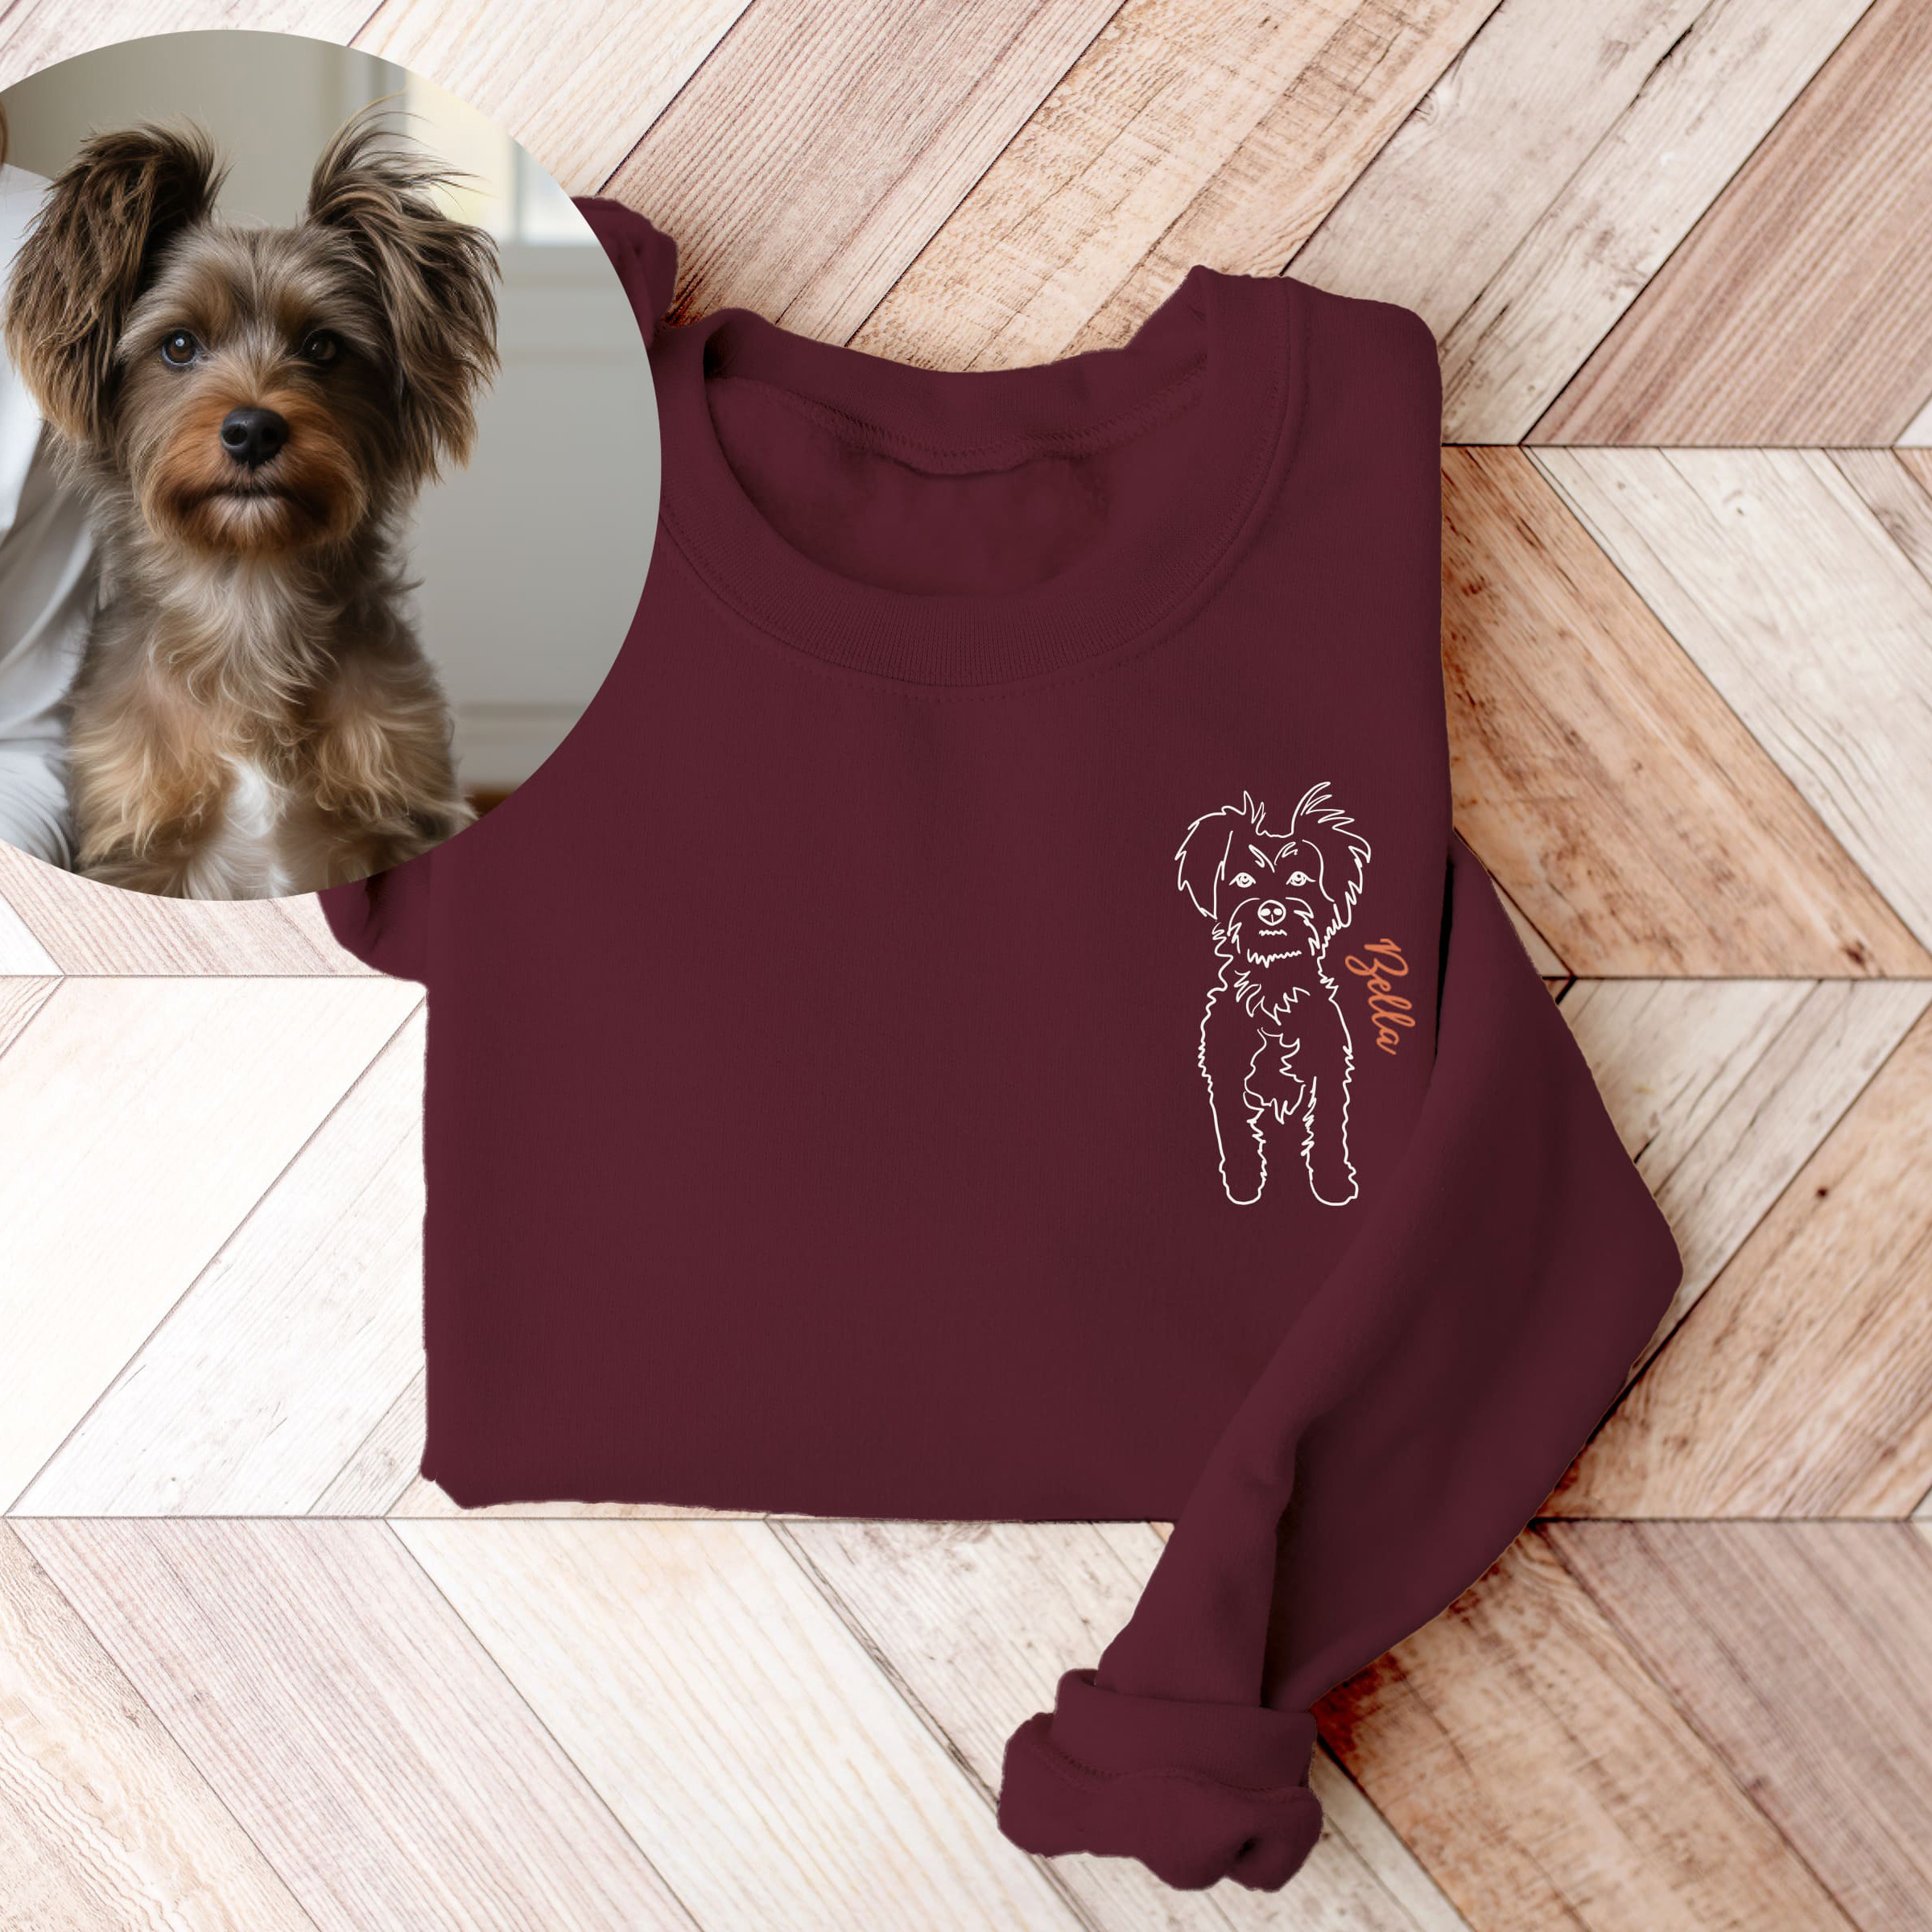 custom dog line portrait illustration on marroon sweatshirt for him and her